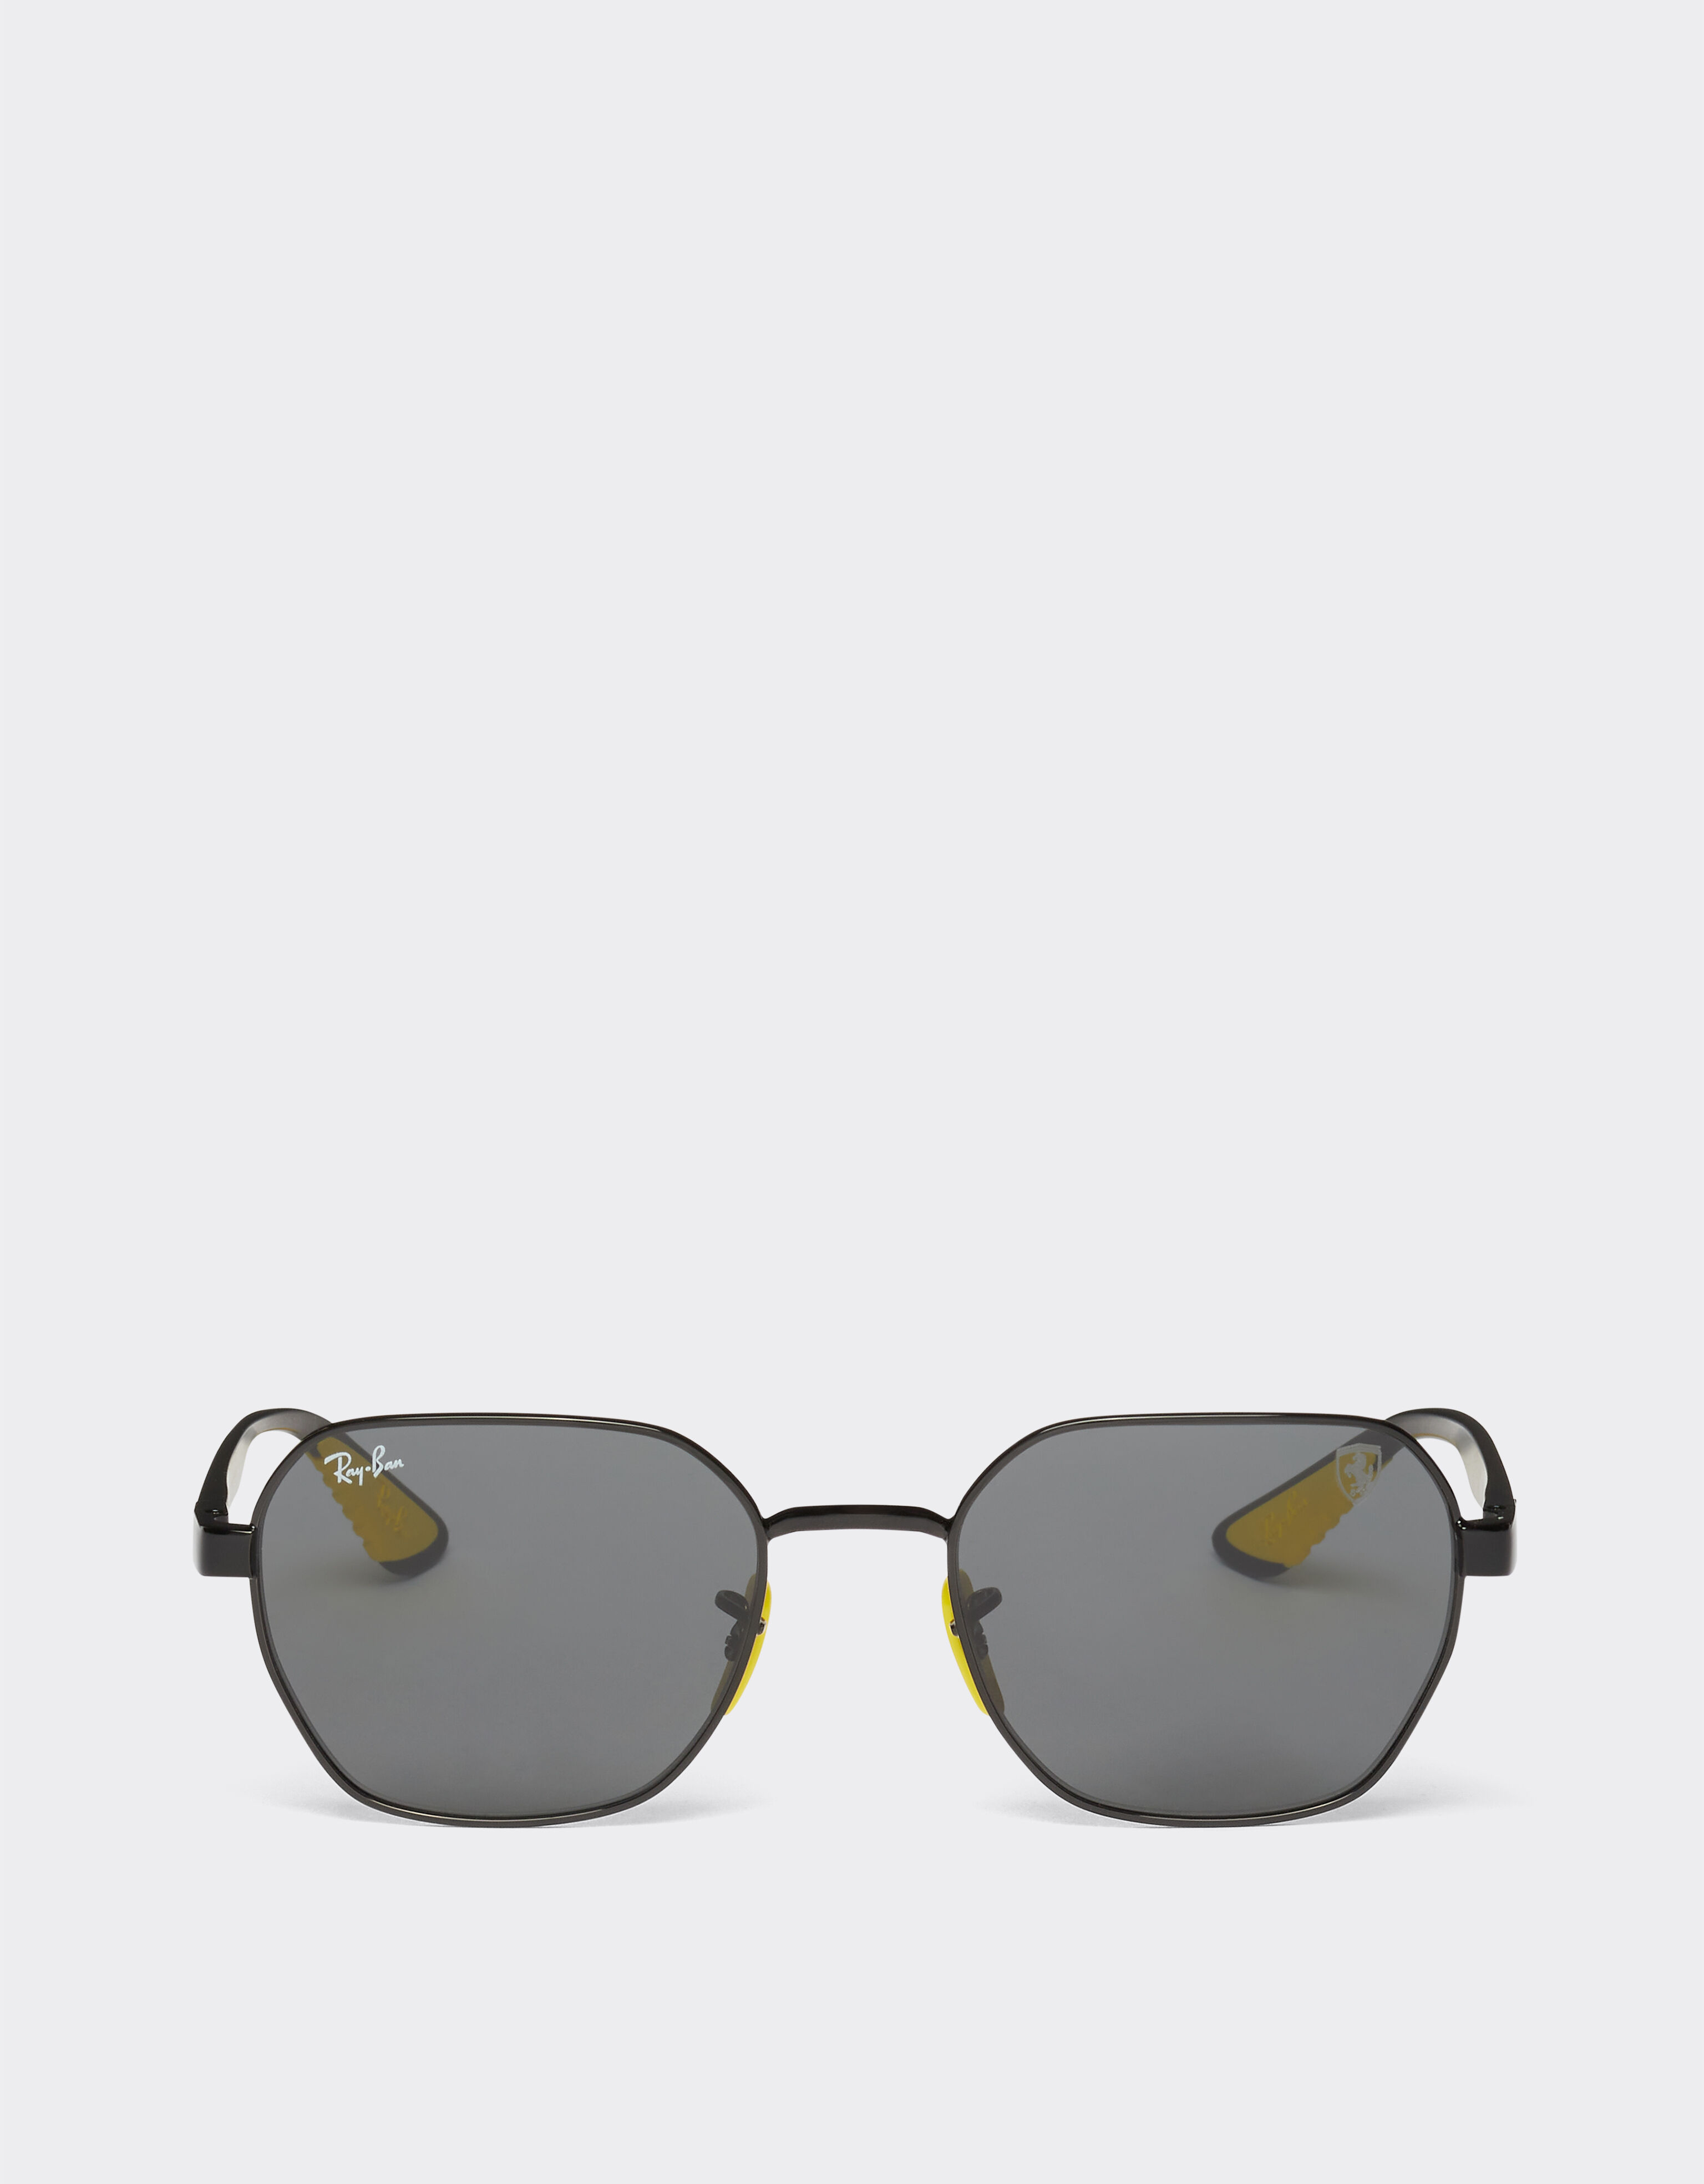 Ferrari Ray-Ban for Scuderia Ferrari 0RB3794M black metal sunglasses with grey lenses Black Matt F1257f